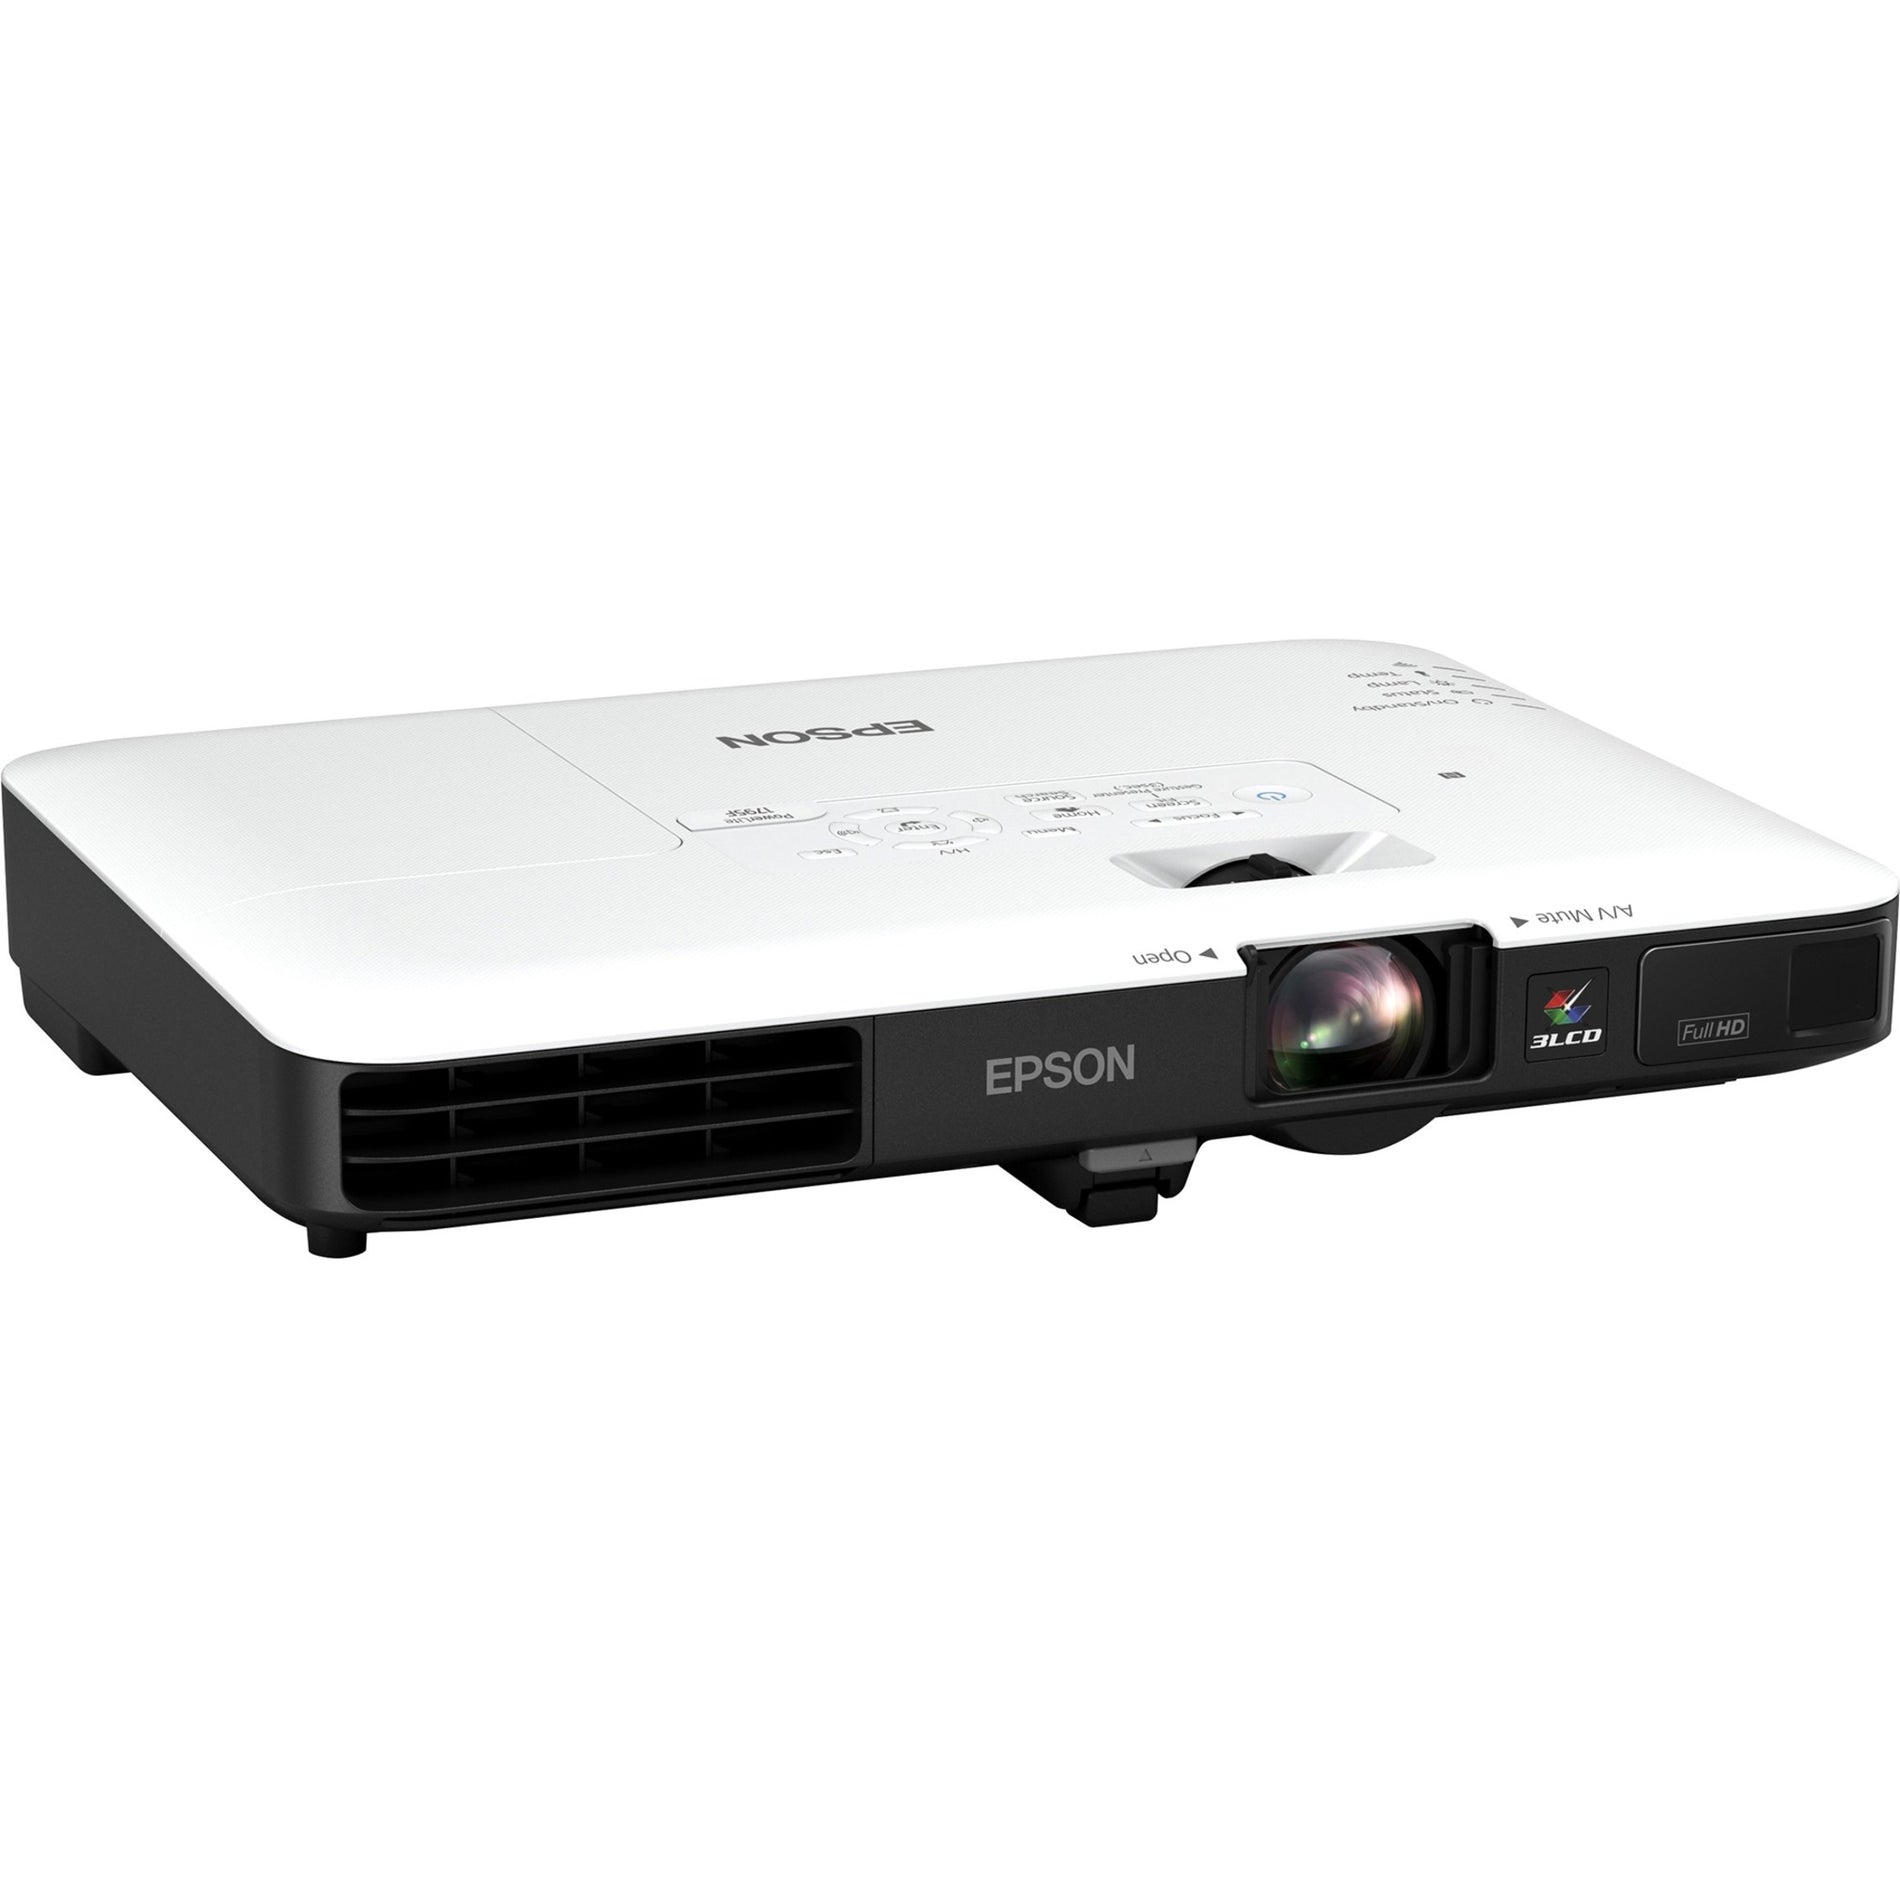 Epson V11H796020 PowerLite 1795F Wireless Full HD 1080p 3LCD Projector, 3200 Lumens, 16:9 Aspect Ratio